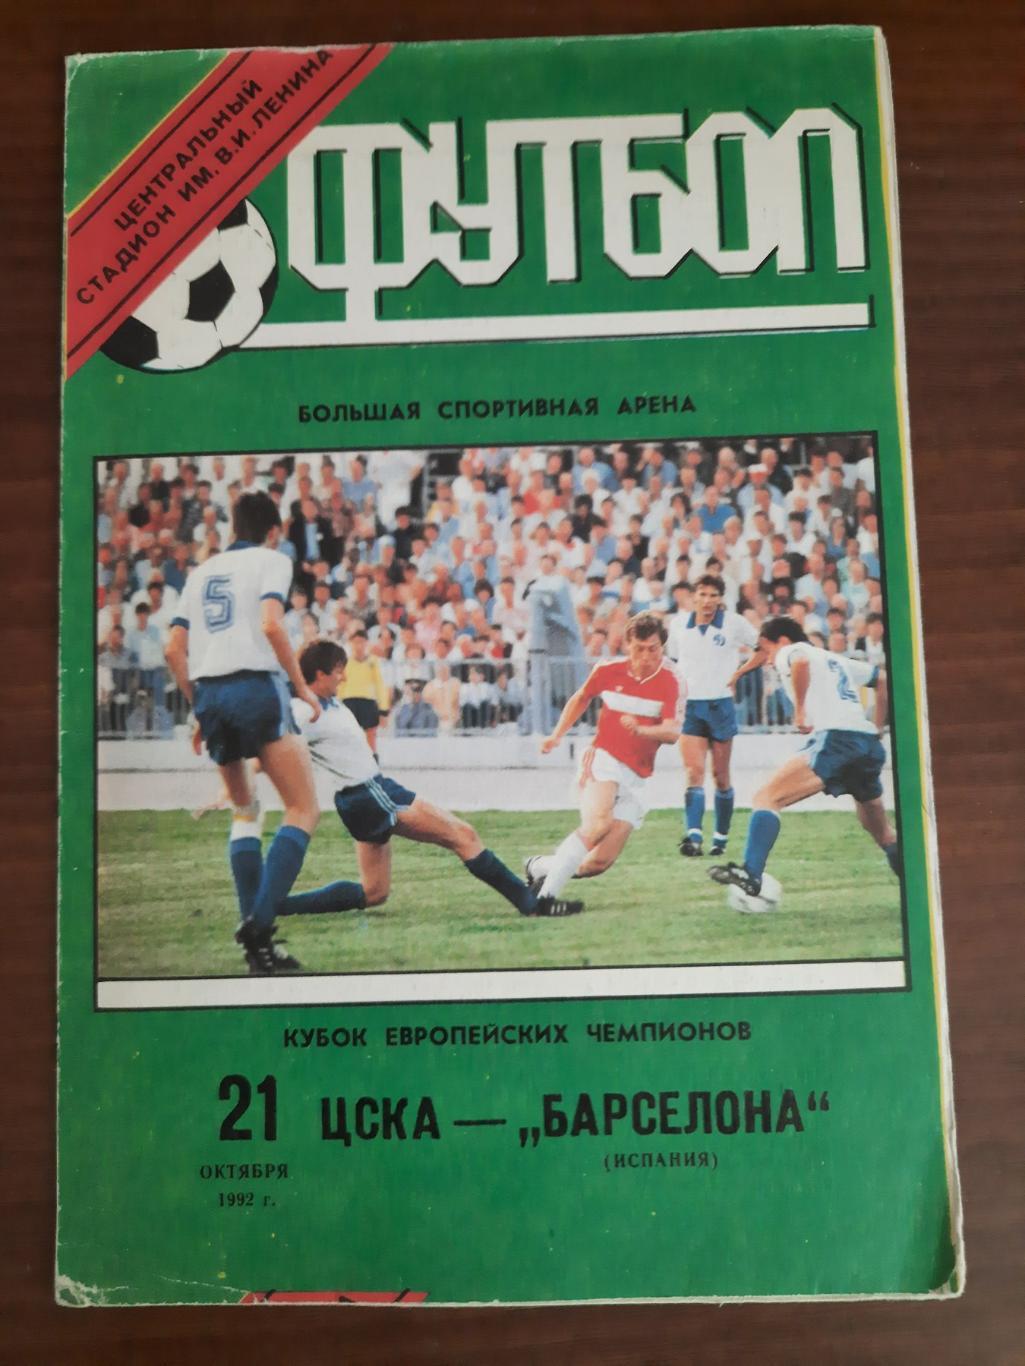 ЦСКА Барселона 21.10.1992